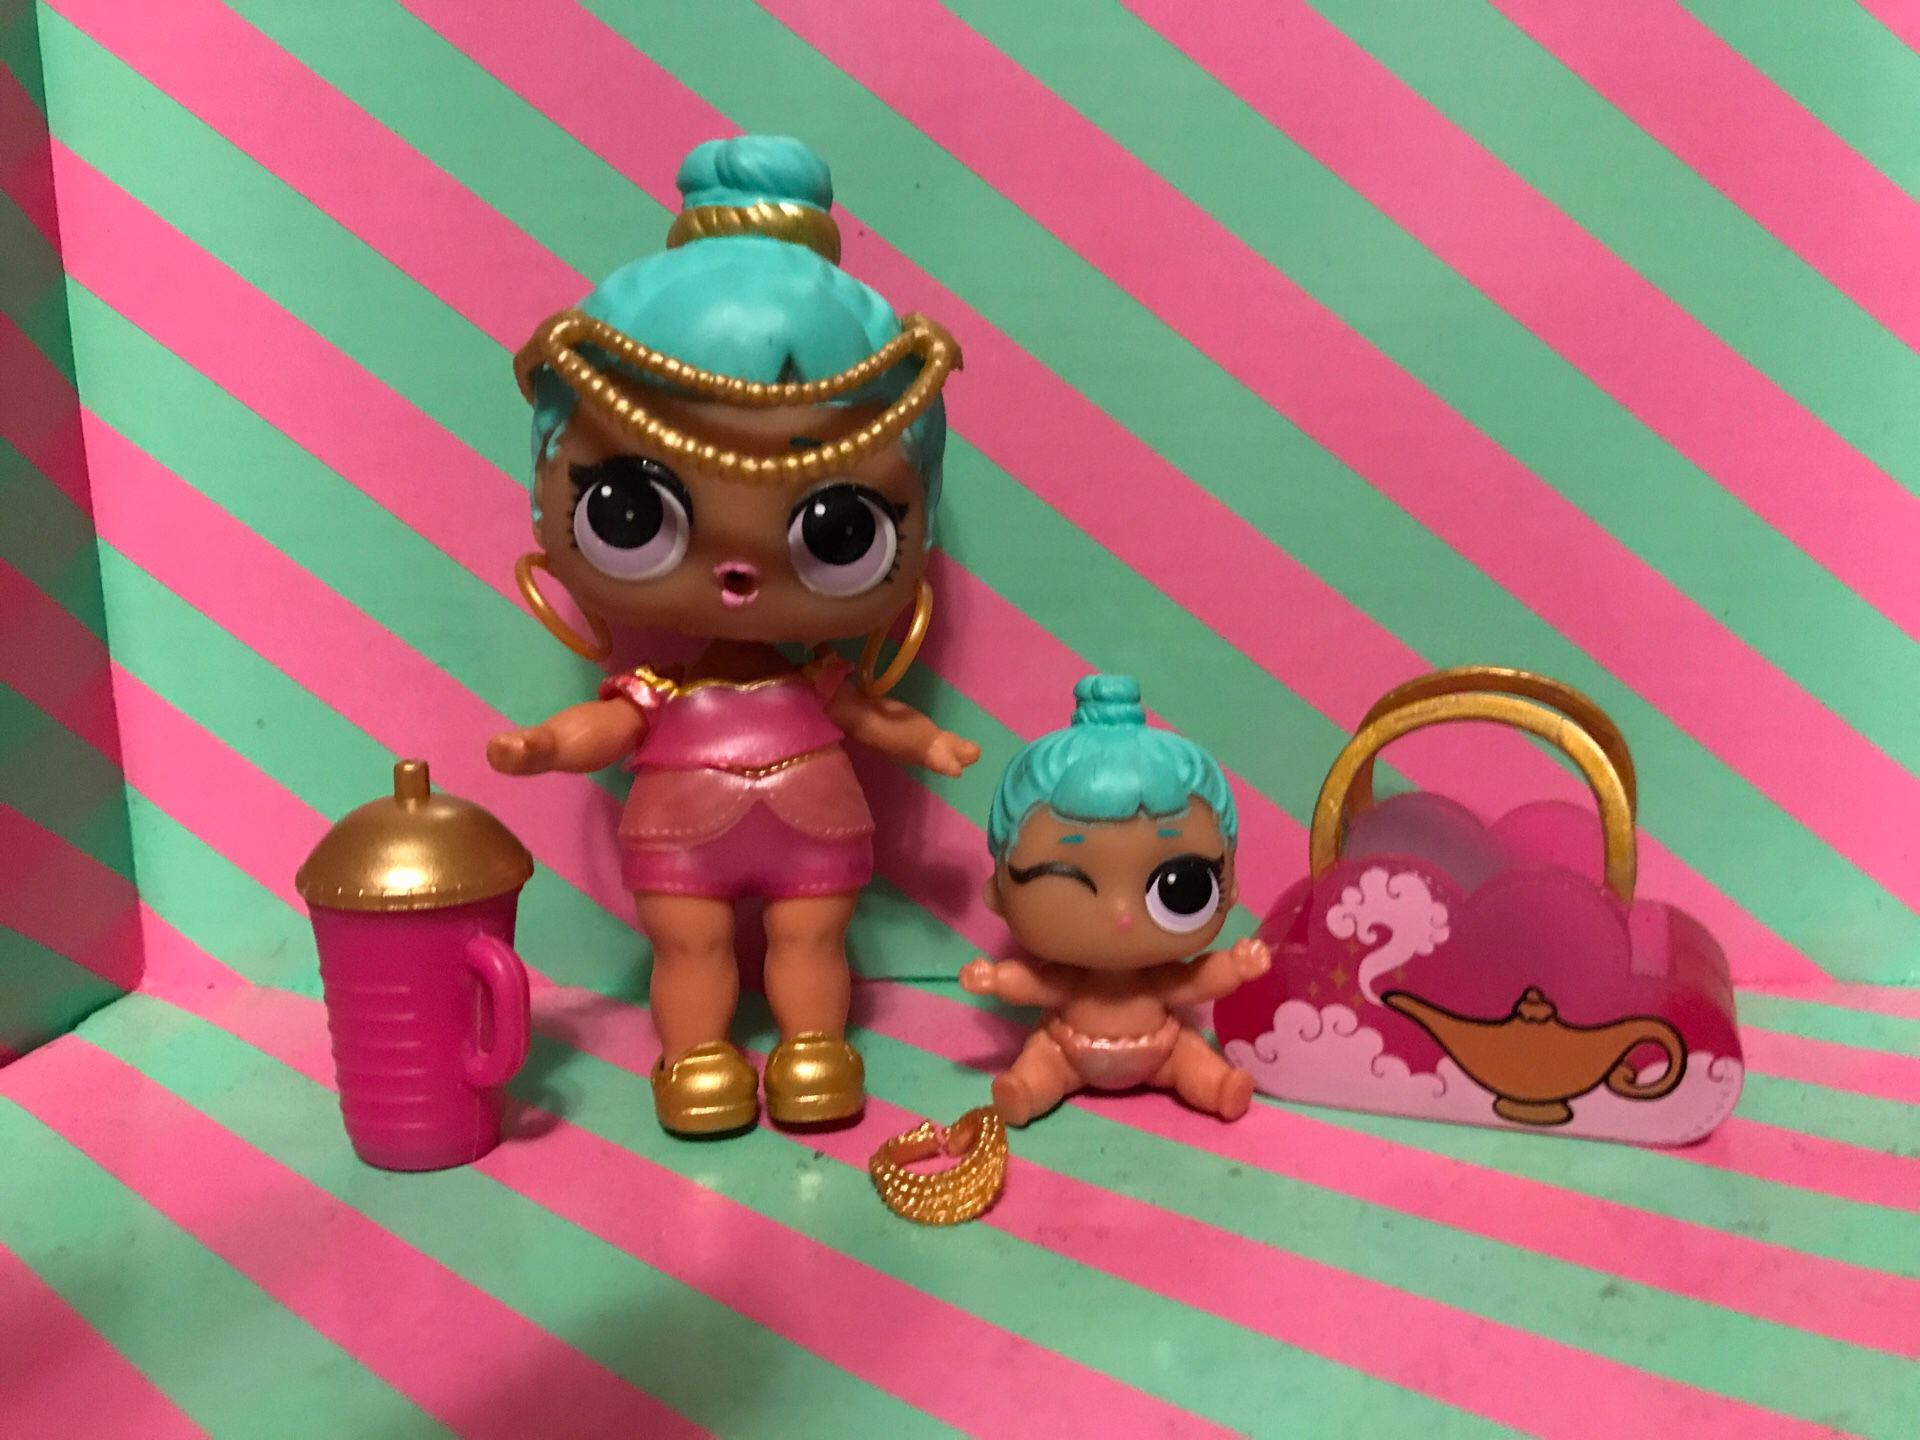 Lol Doll Series 2 Genie and lil genie